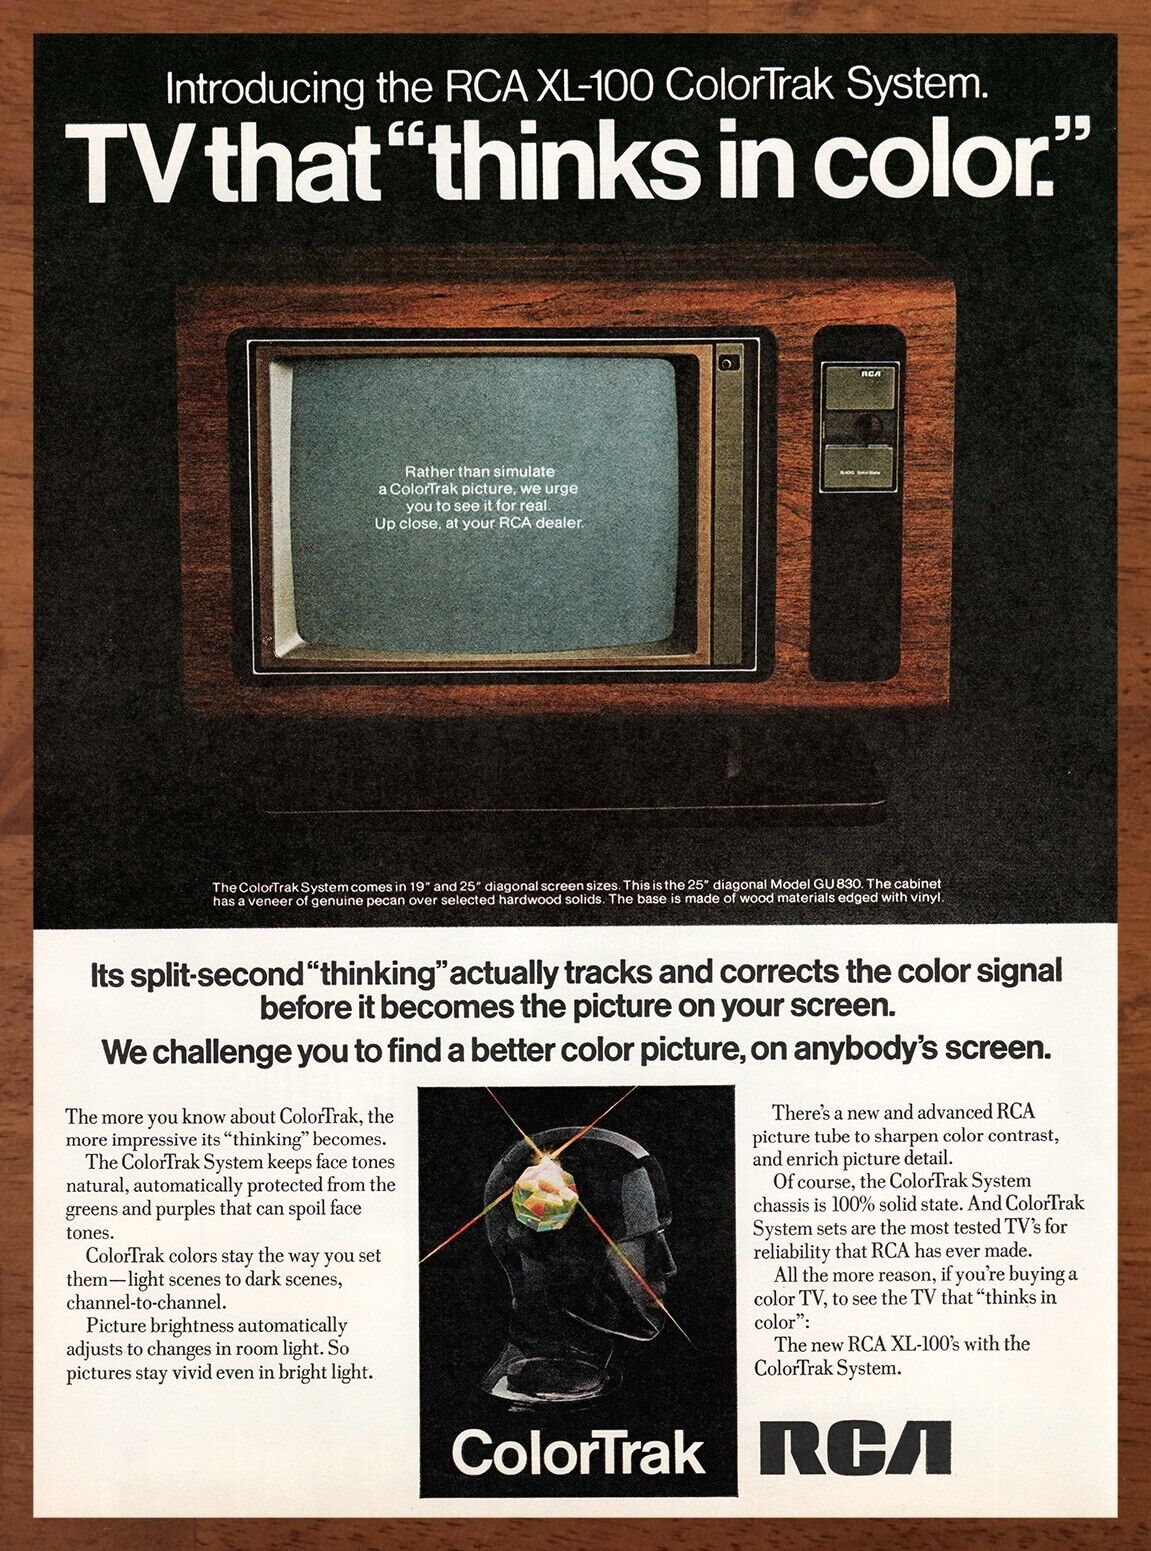 1975 RCA ColorTrak System Vintage Print Ad/Poster 70s Retro Wall Bar Art Decor